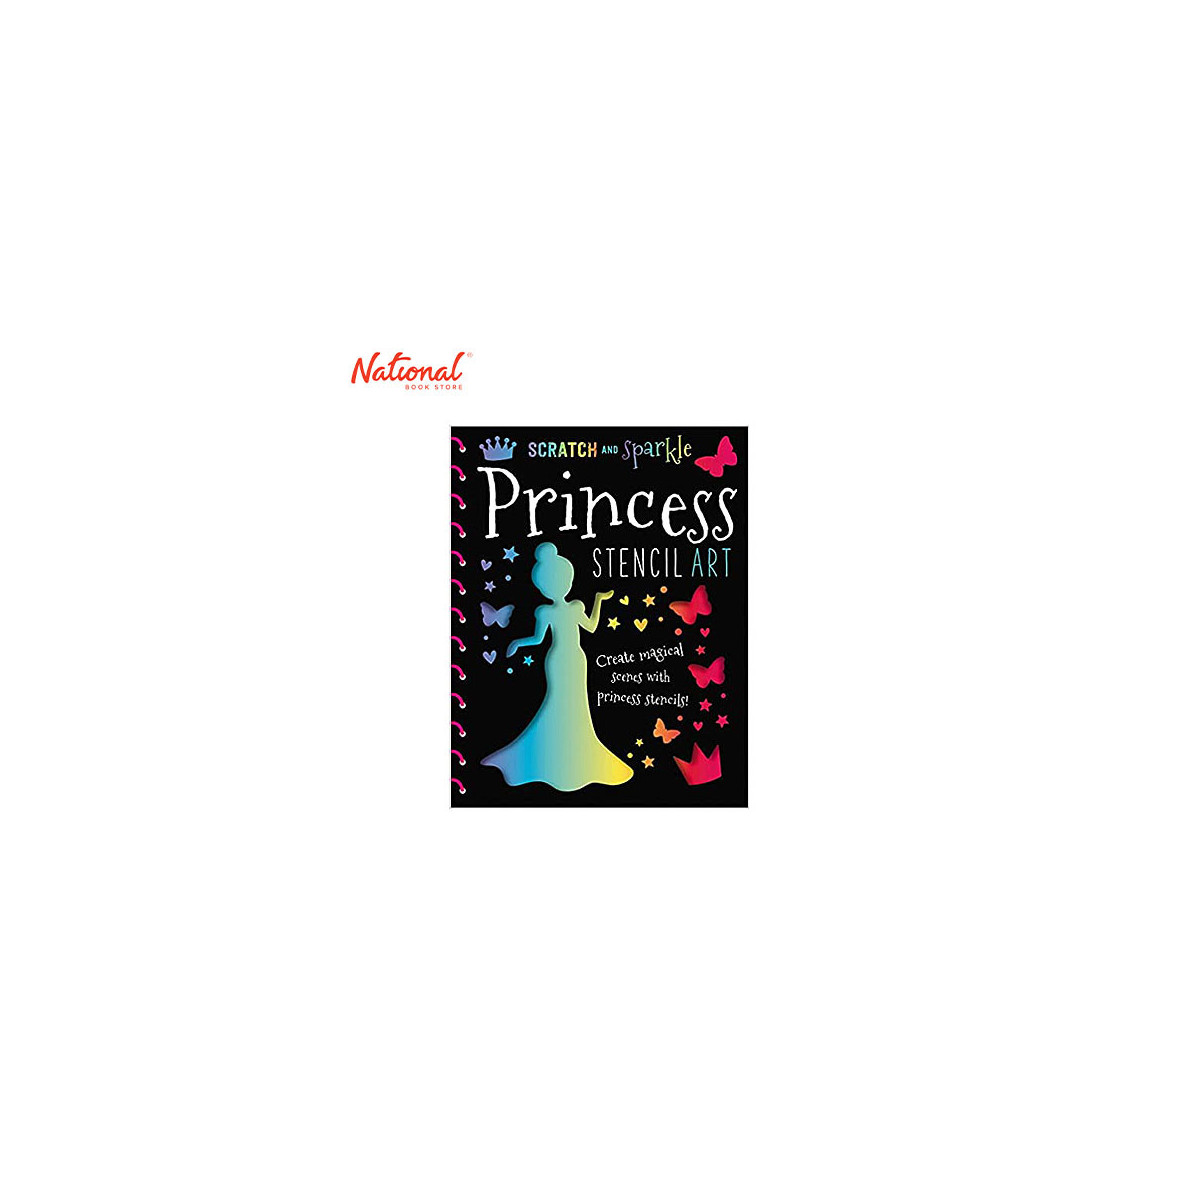 Scratch and Sparkle Princess Stencil Art Trade Paperback by Make Believe Ideas Ltd.